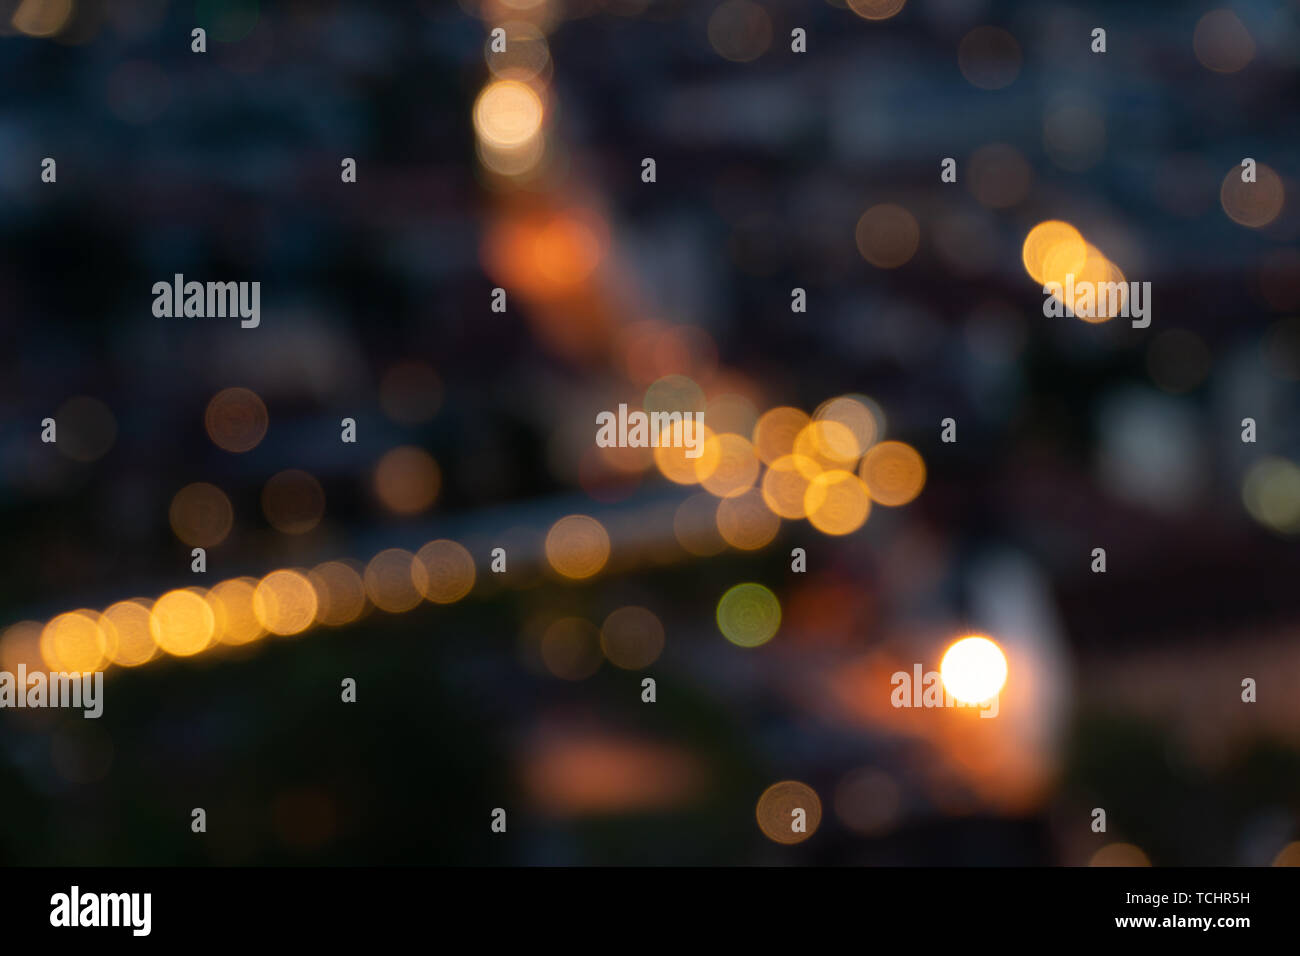 light night bokeh city blur at night, background photo Stock Photo - Alamy